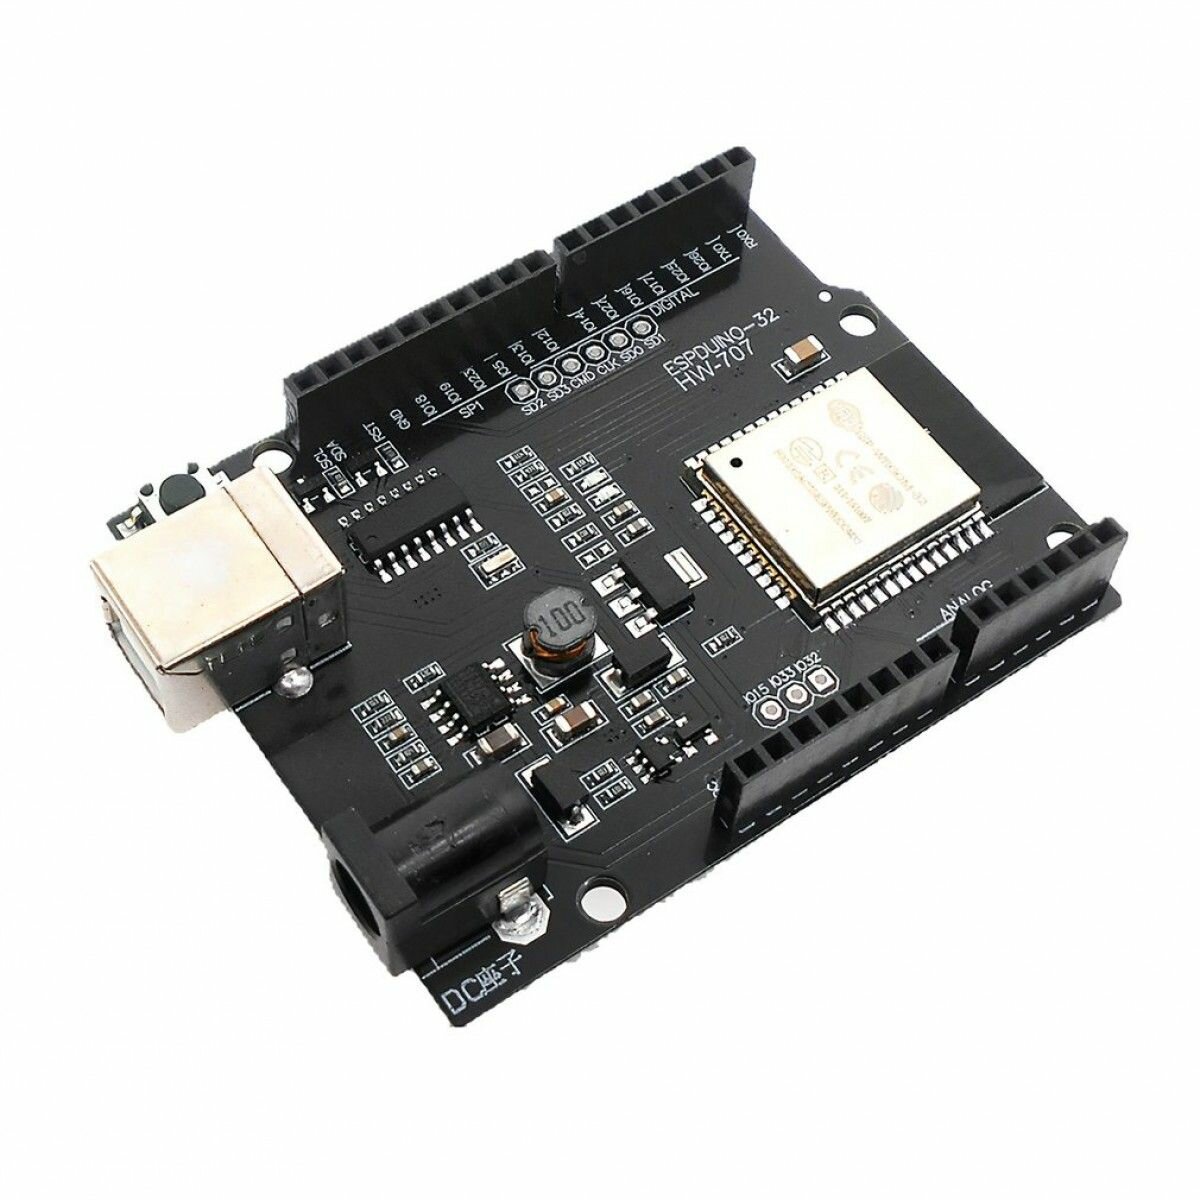 Espduino-32, ESP32+WiFi + Bluetooth (Arduino совместимая плата)